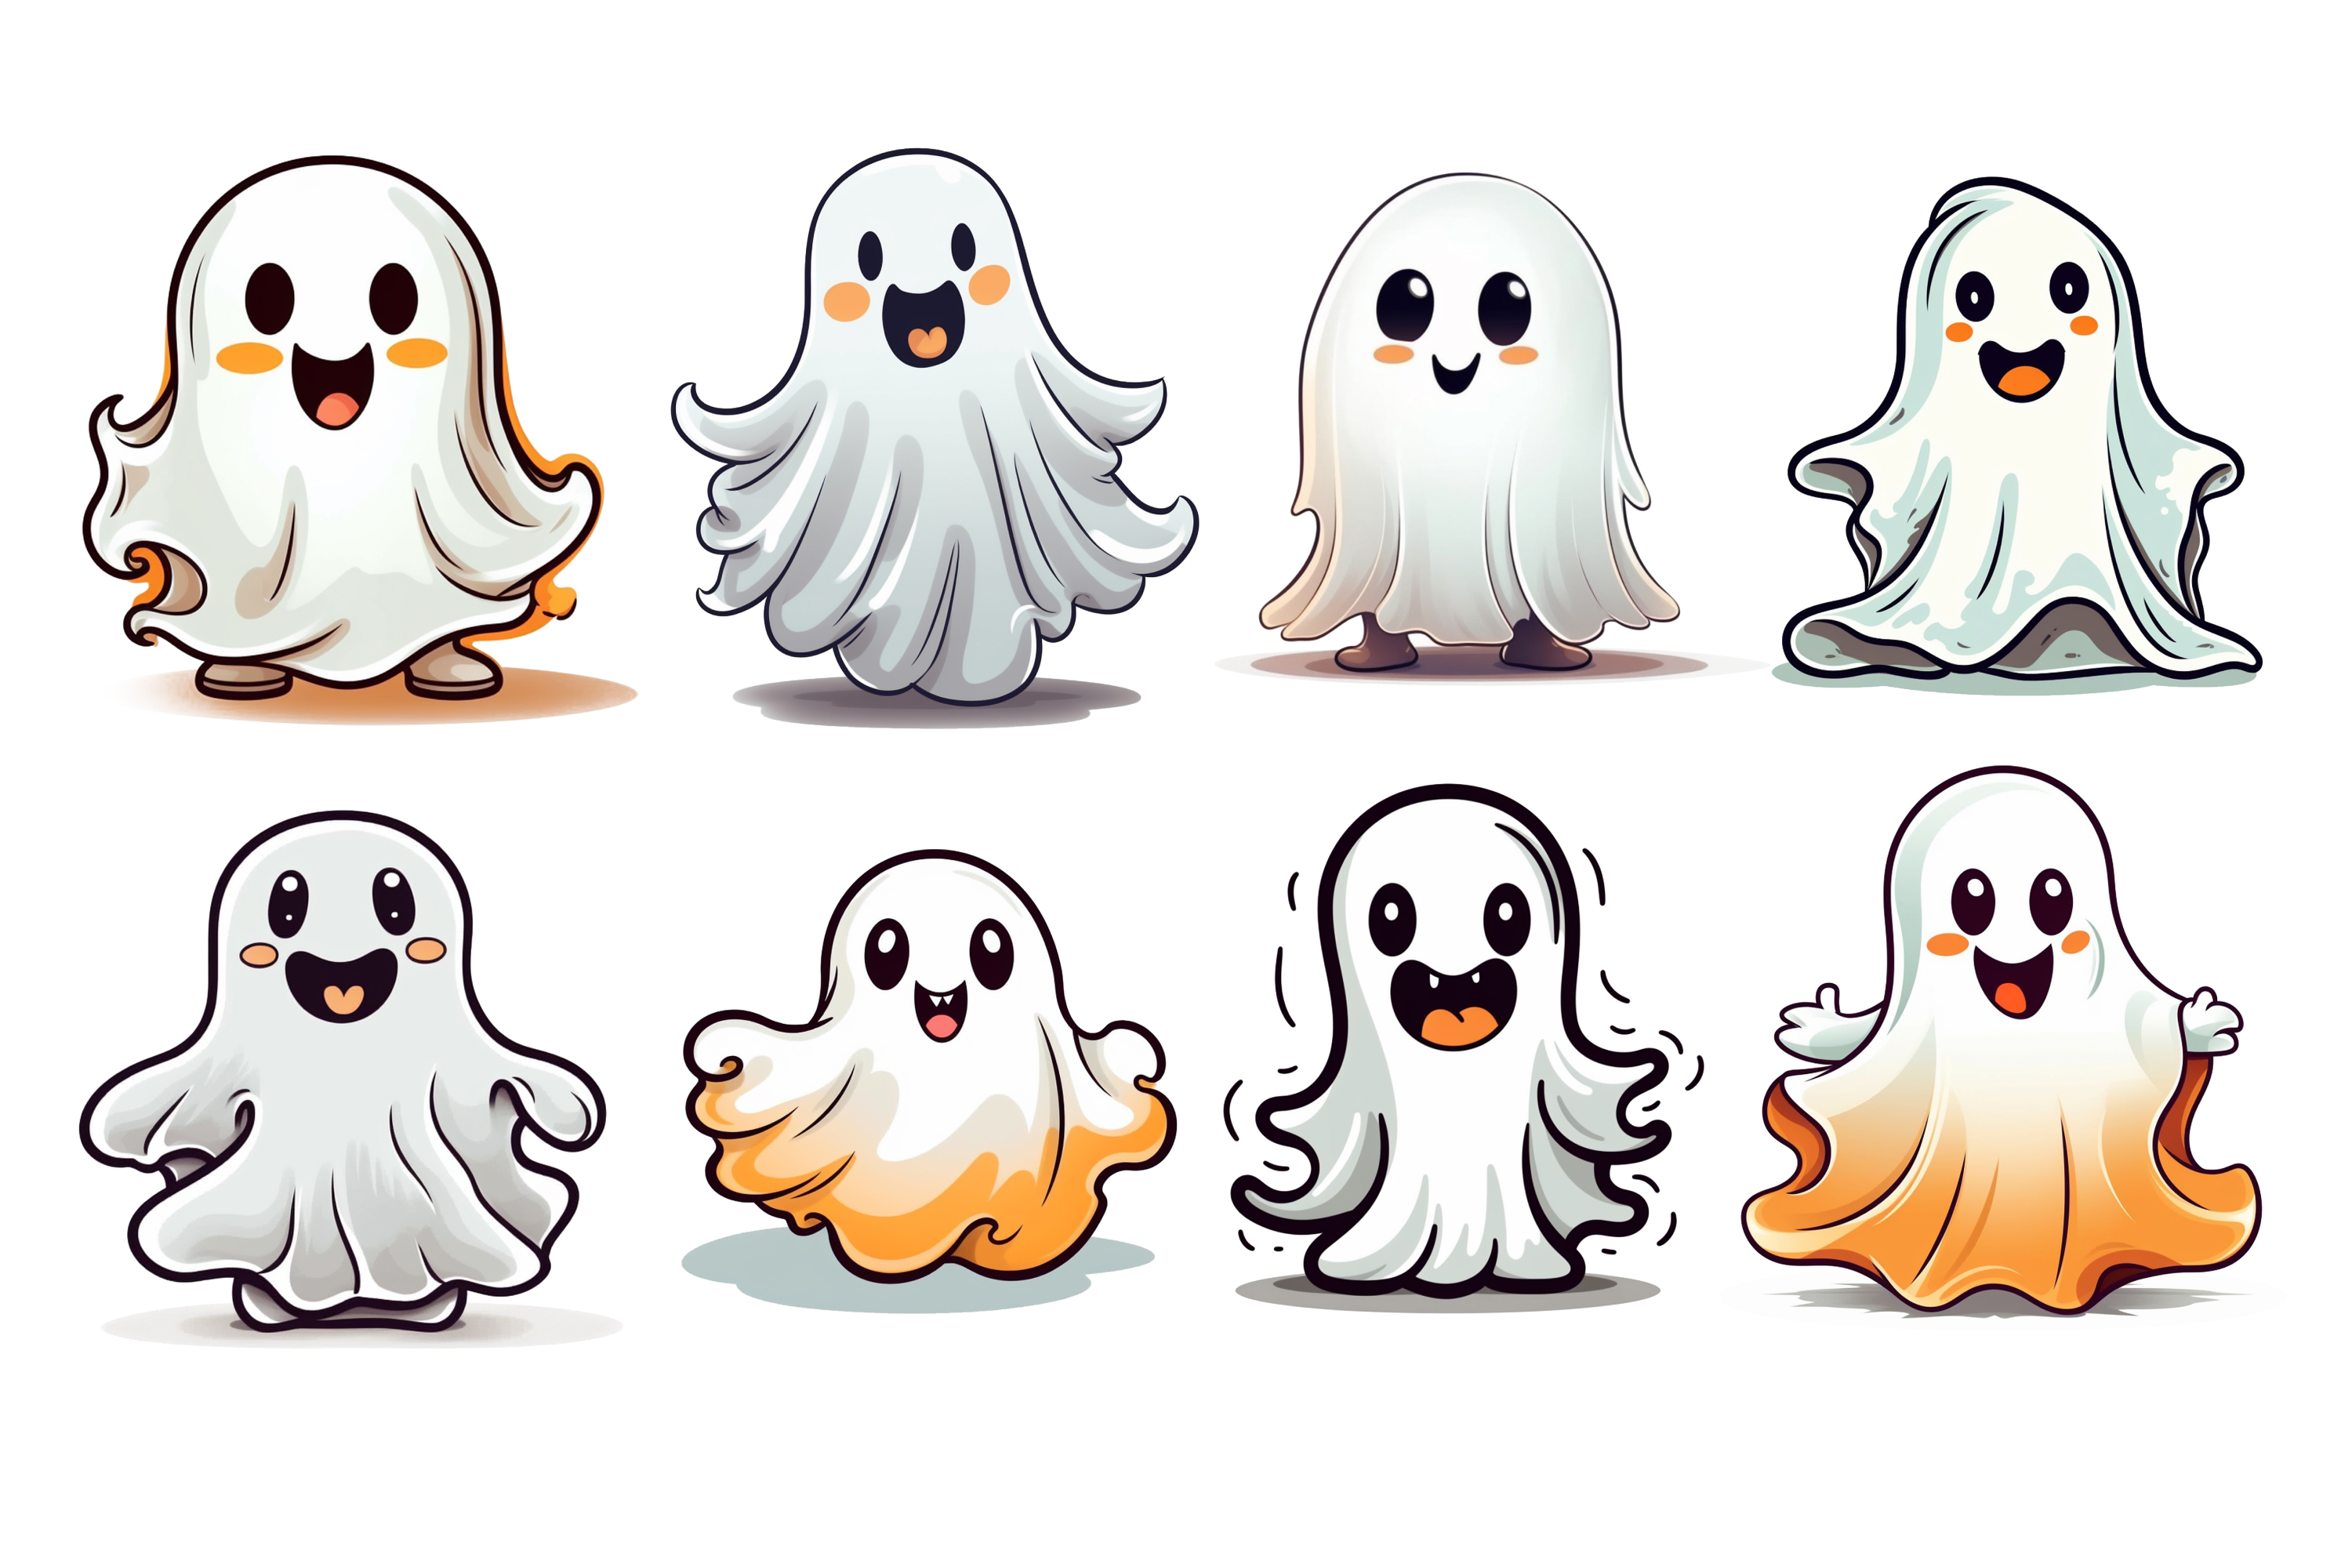 cute ghost clipart